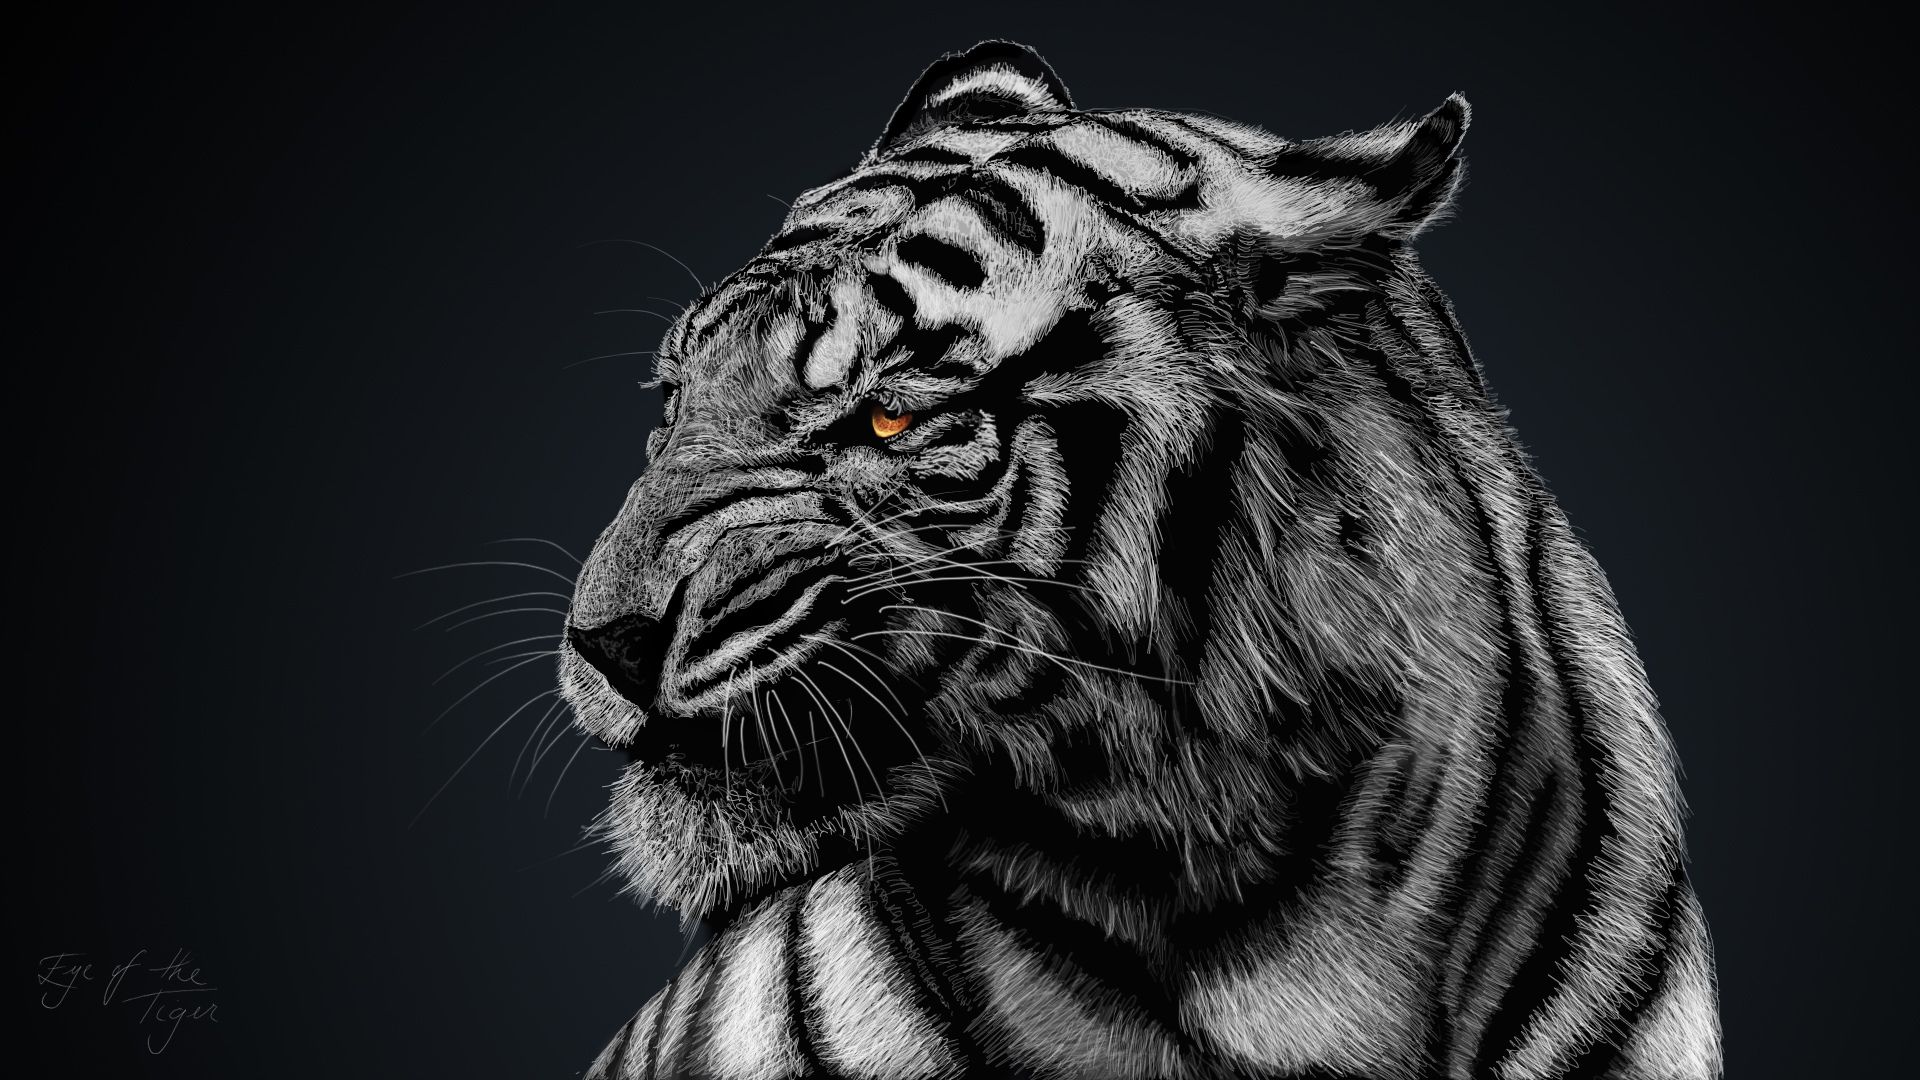 Free download tiger wallpapers hd for desktop